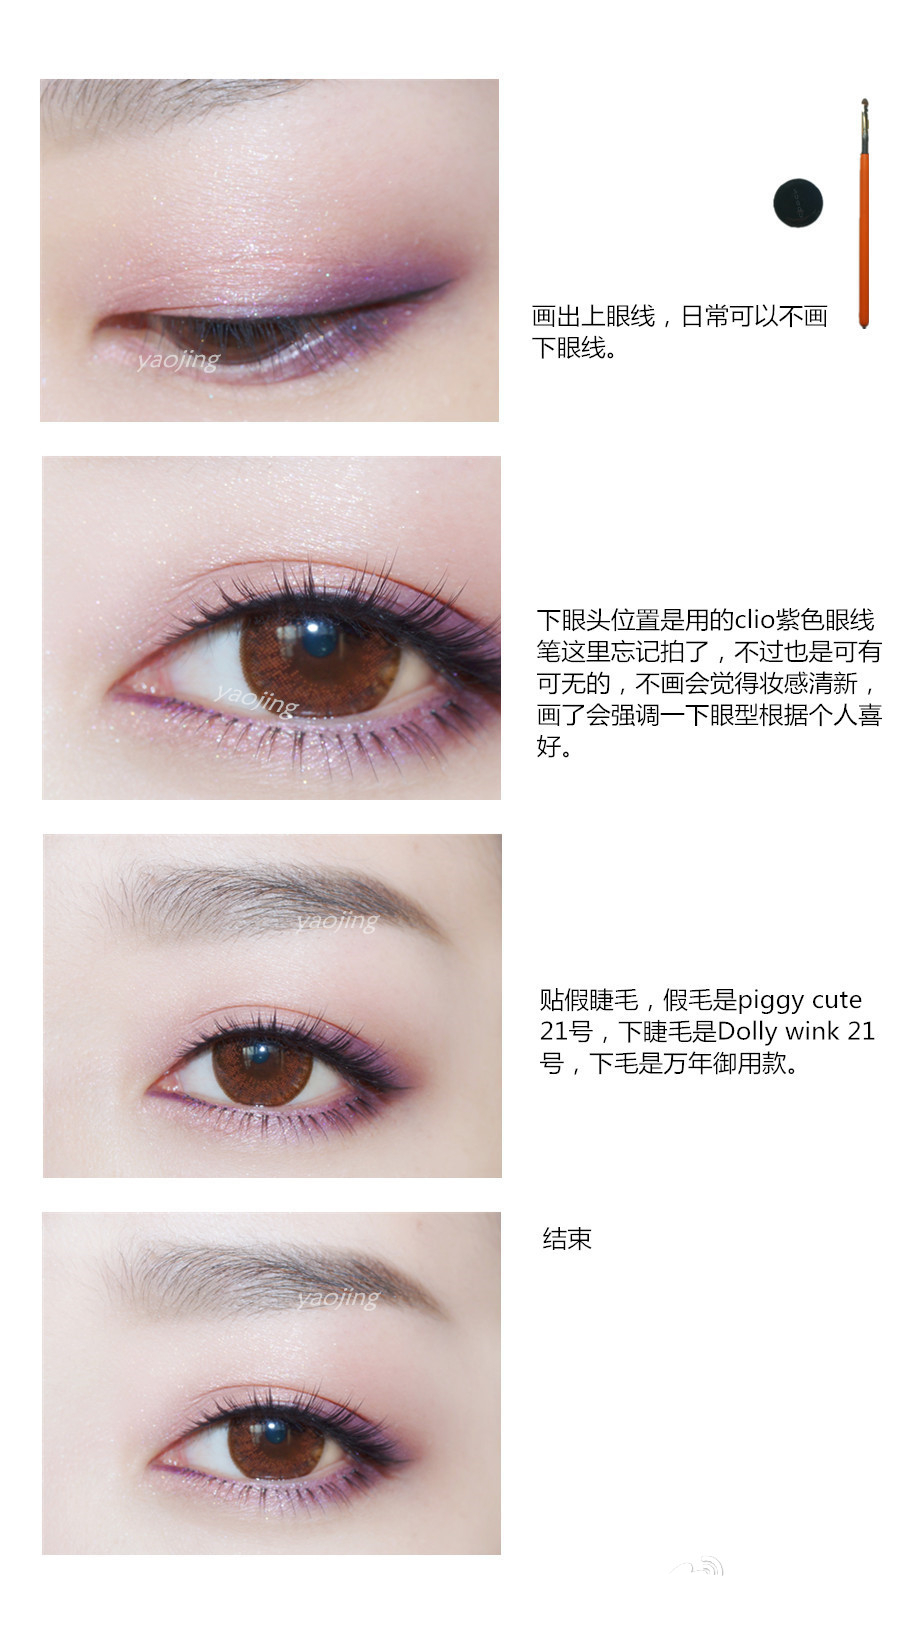 suqqu花紫苑眼妆步骤画法图